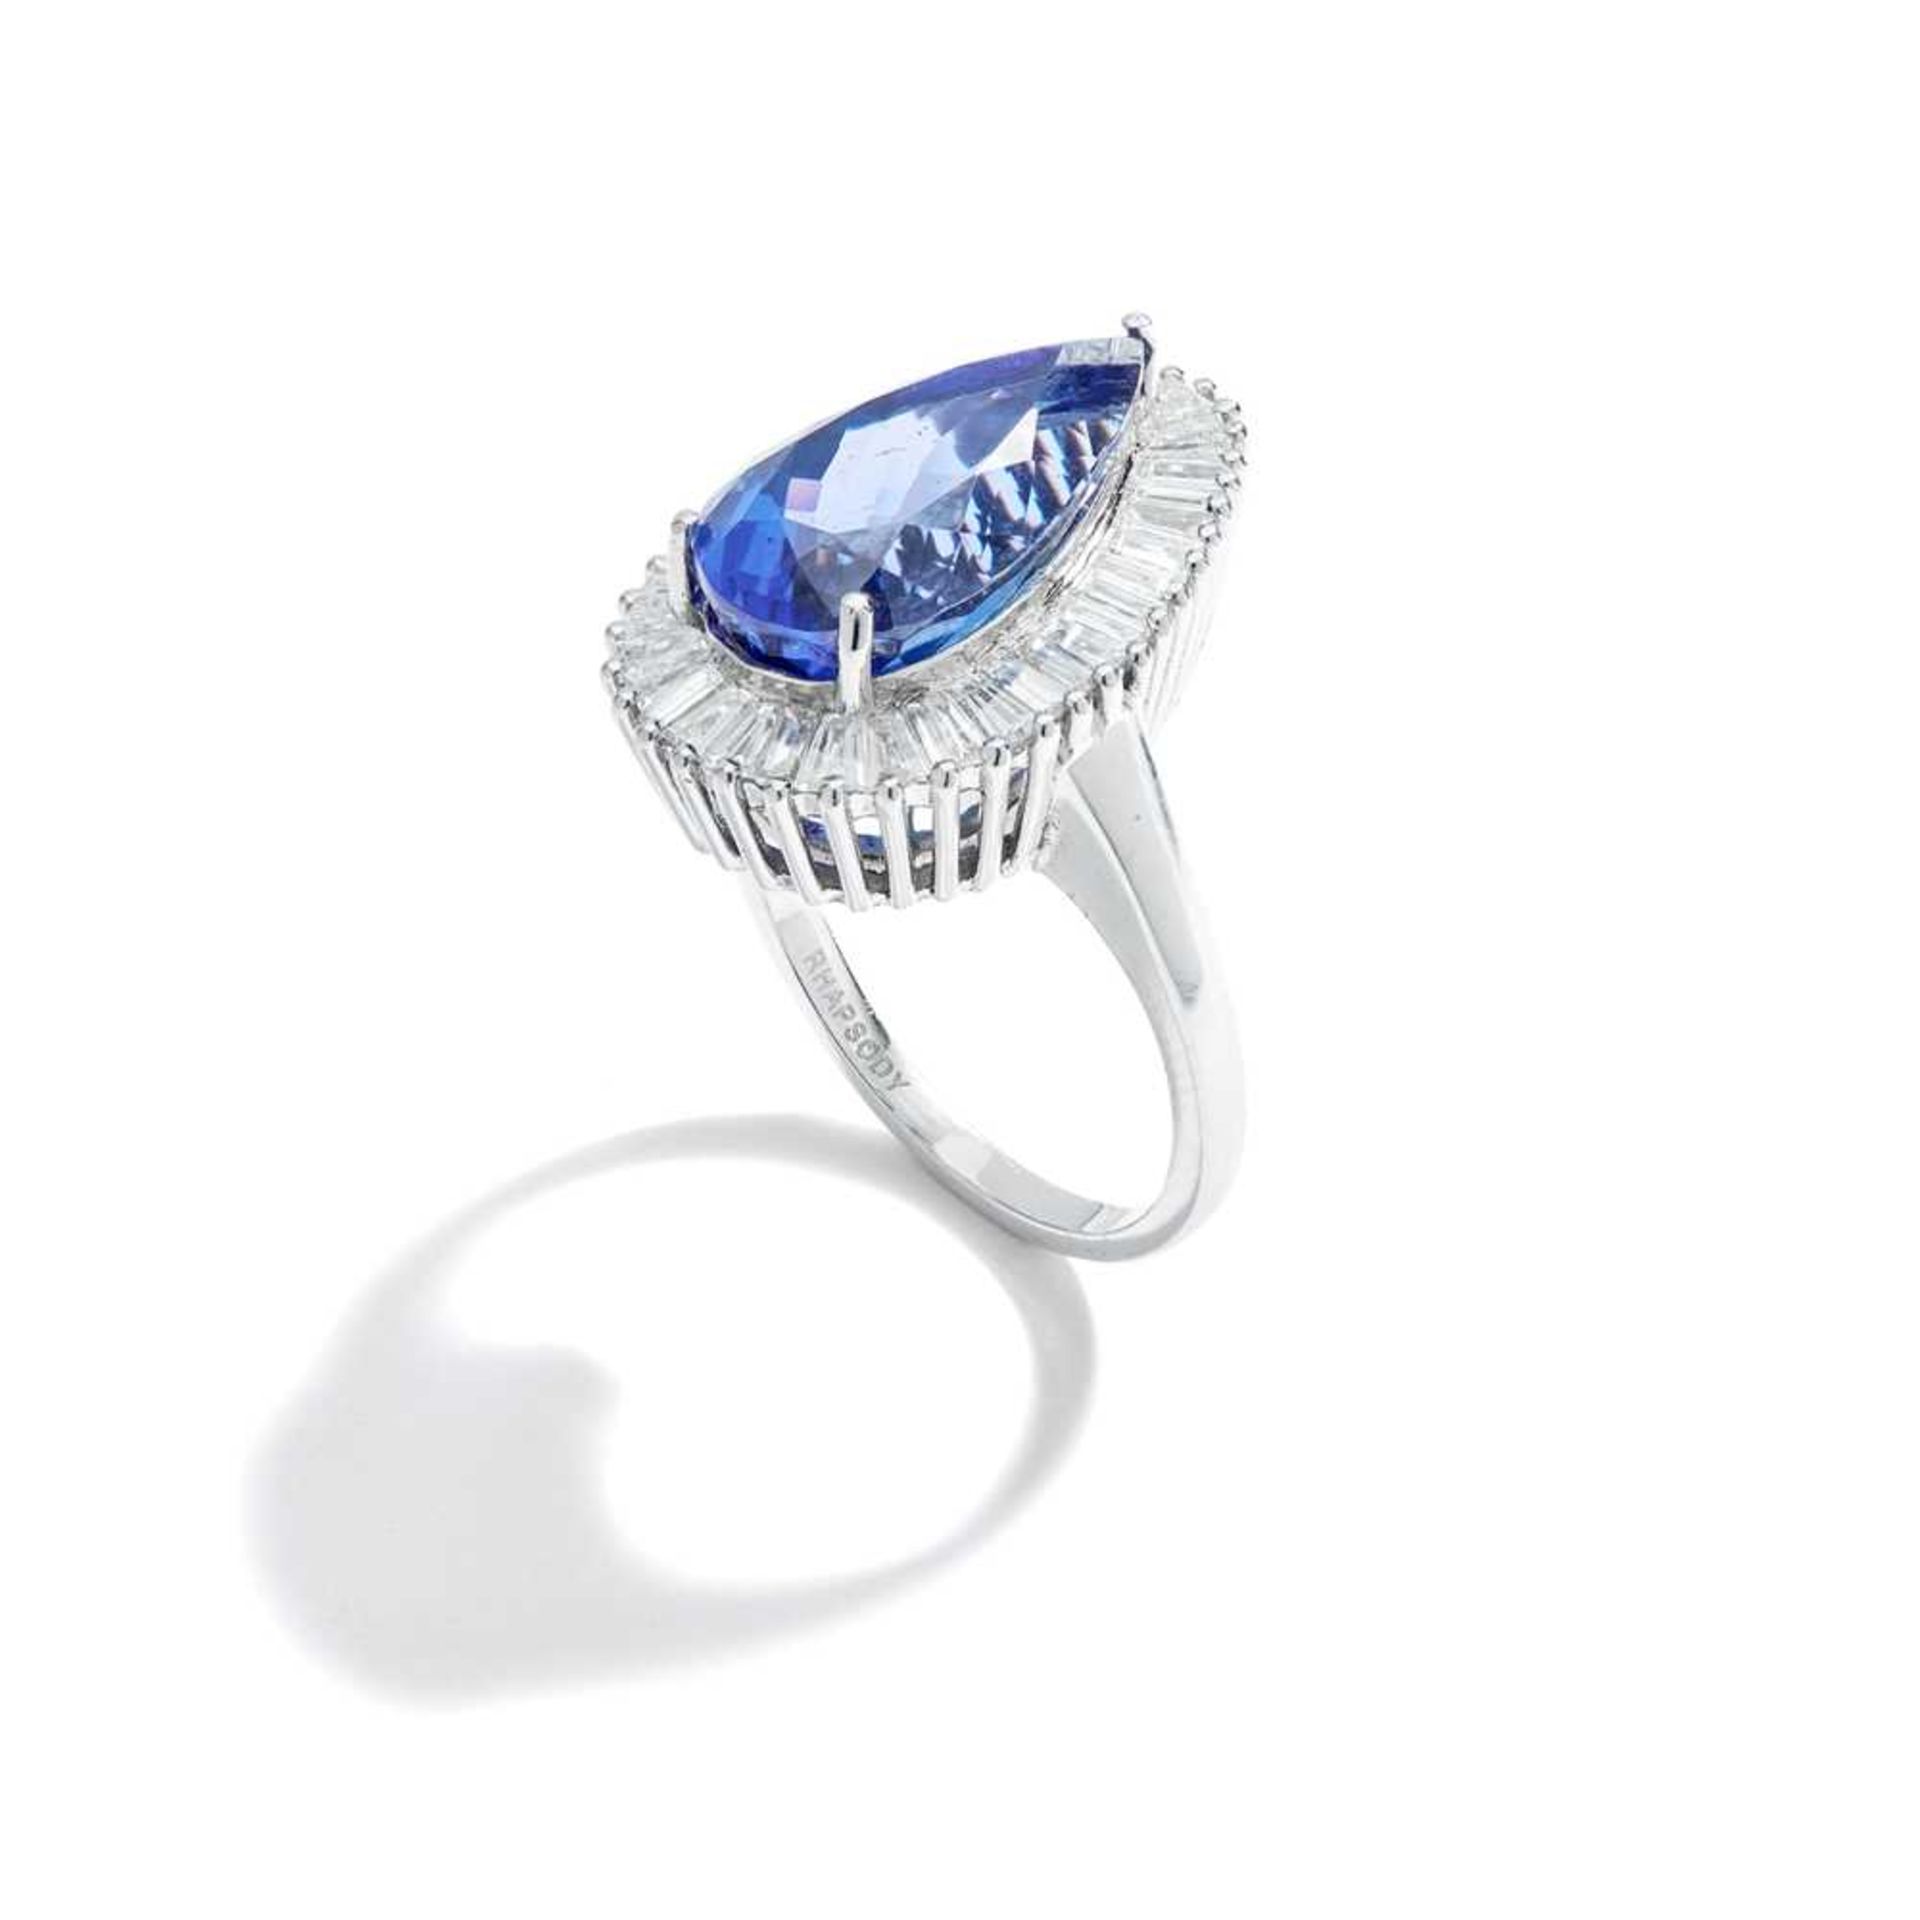 A tanzanite and diamond dress ring - Image 2 of 2